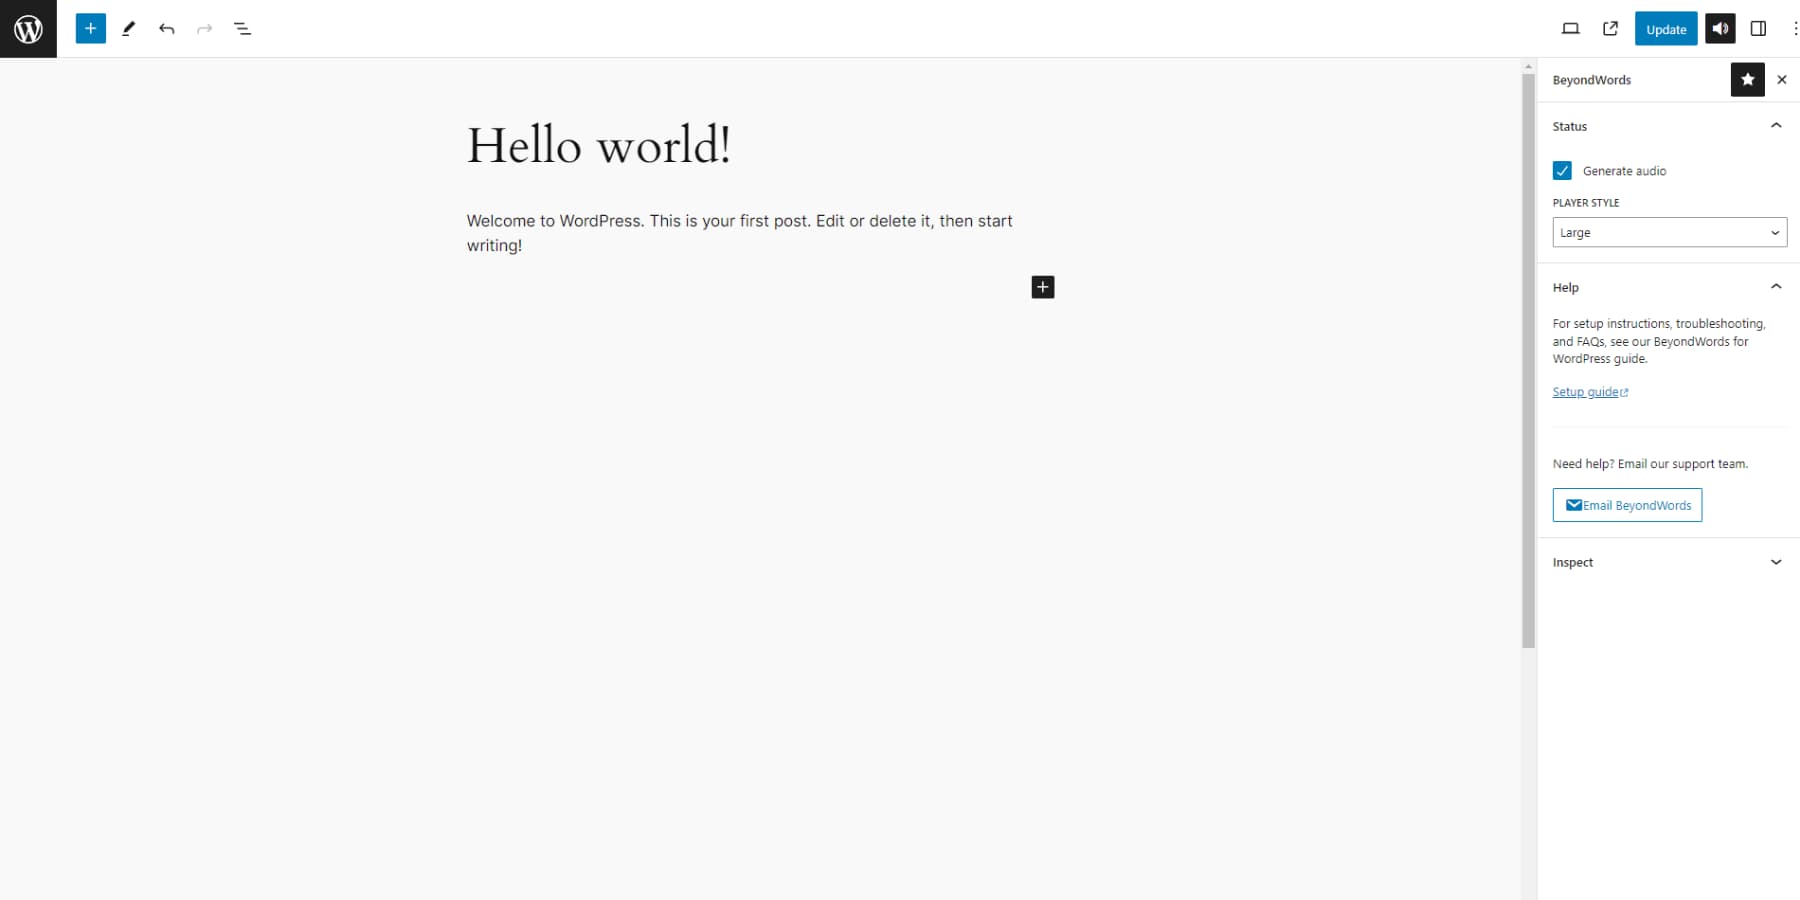 A screenshot of BeyondWords' WordPress plugin's user interface